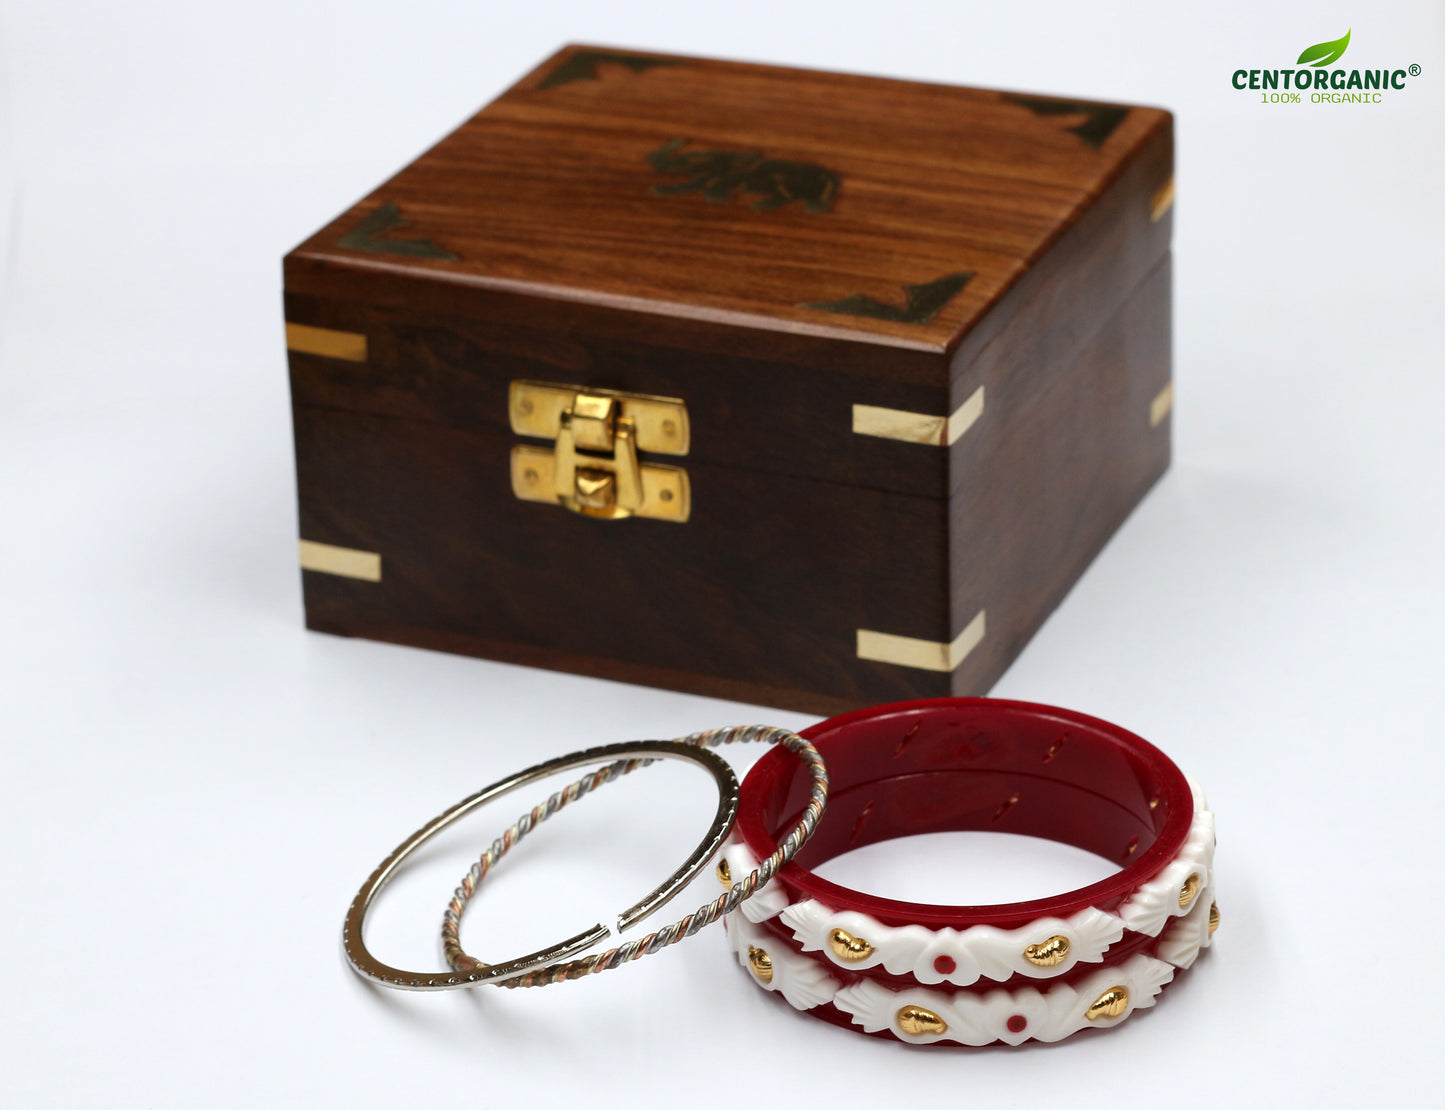 Centorganic Fashion sankha pola bangles for women, 1 pair of Fashion Imitation Kargil Sankha, 2 iron noa, with free wooden jewellery box. (Design code: CSBM11)